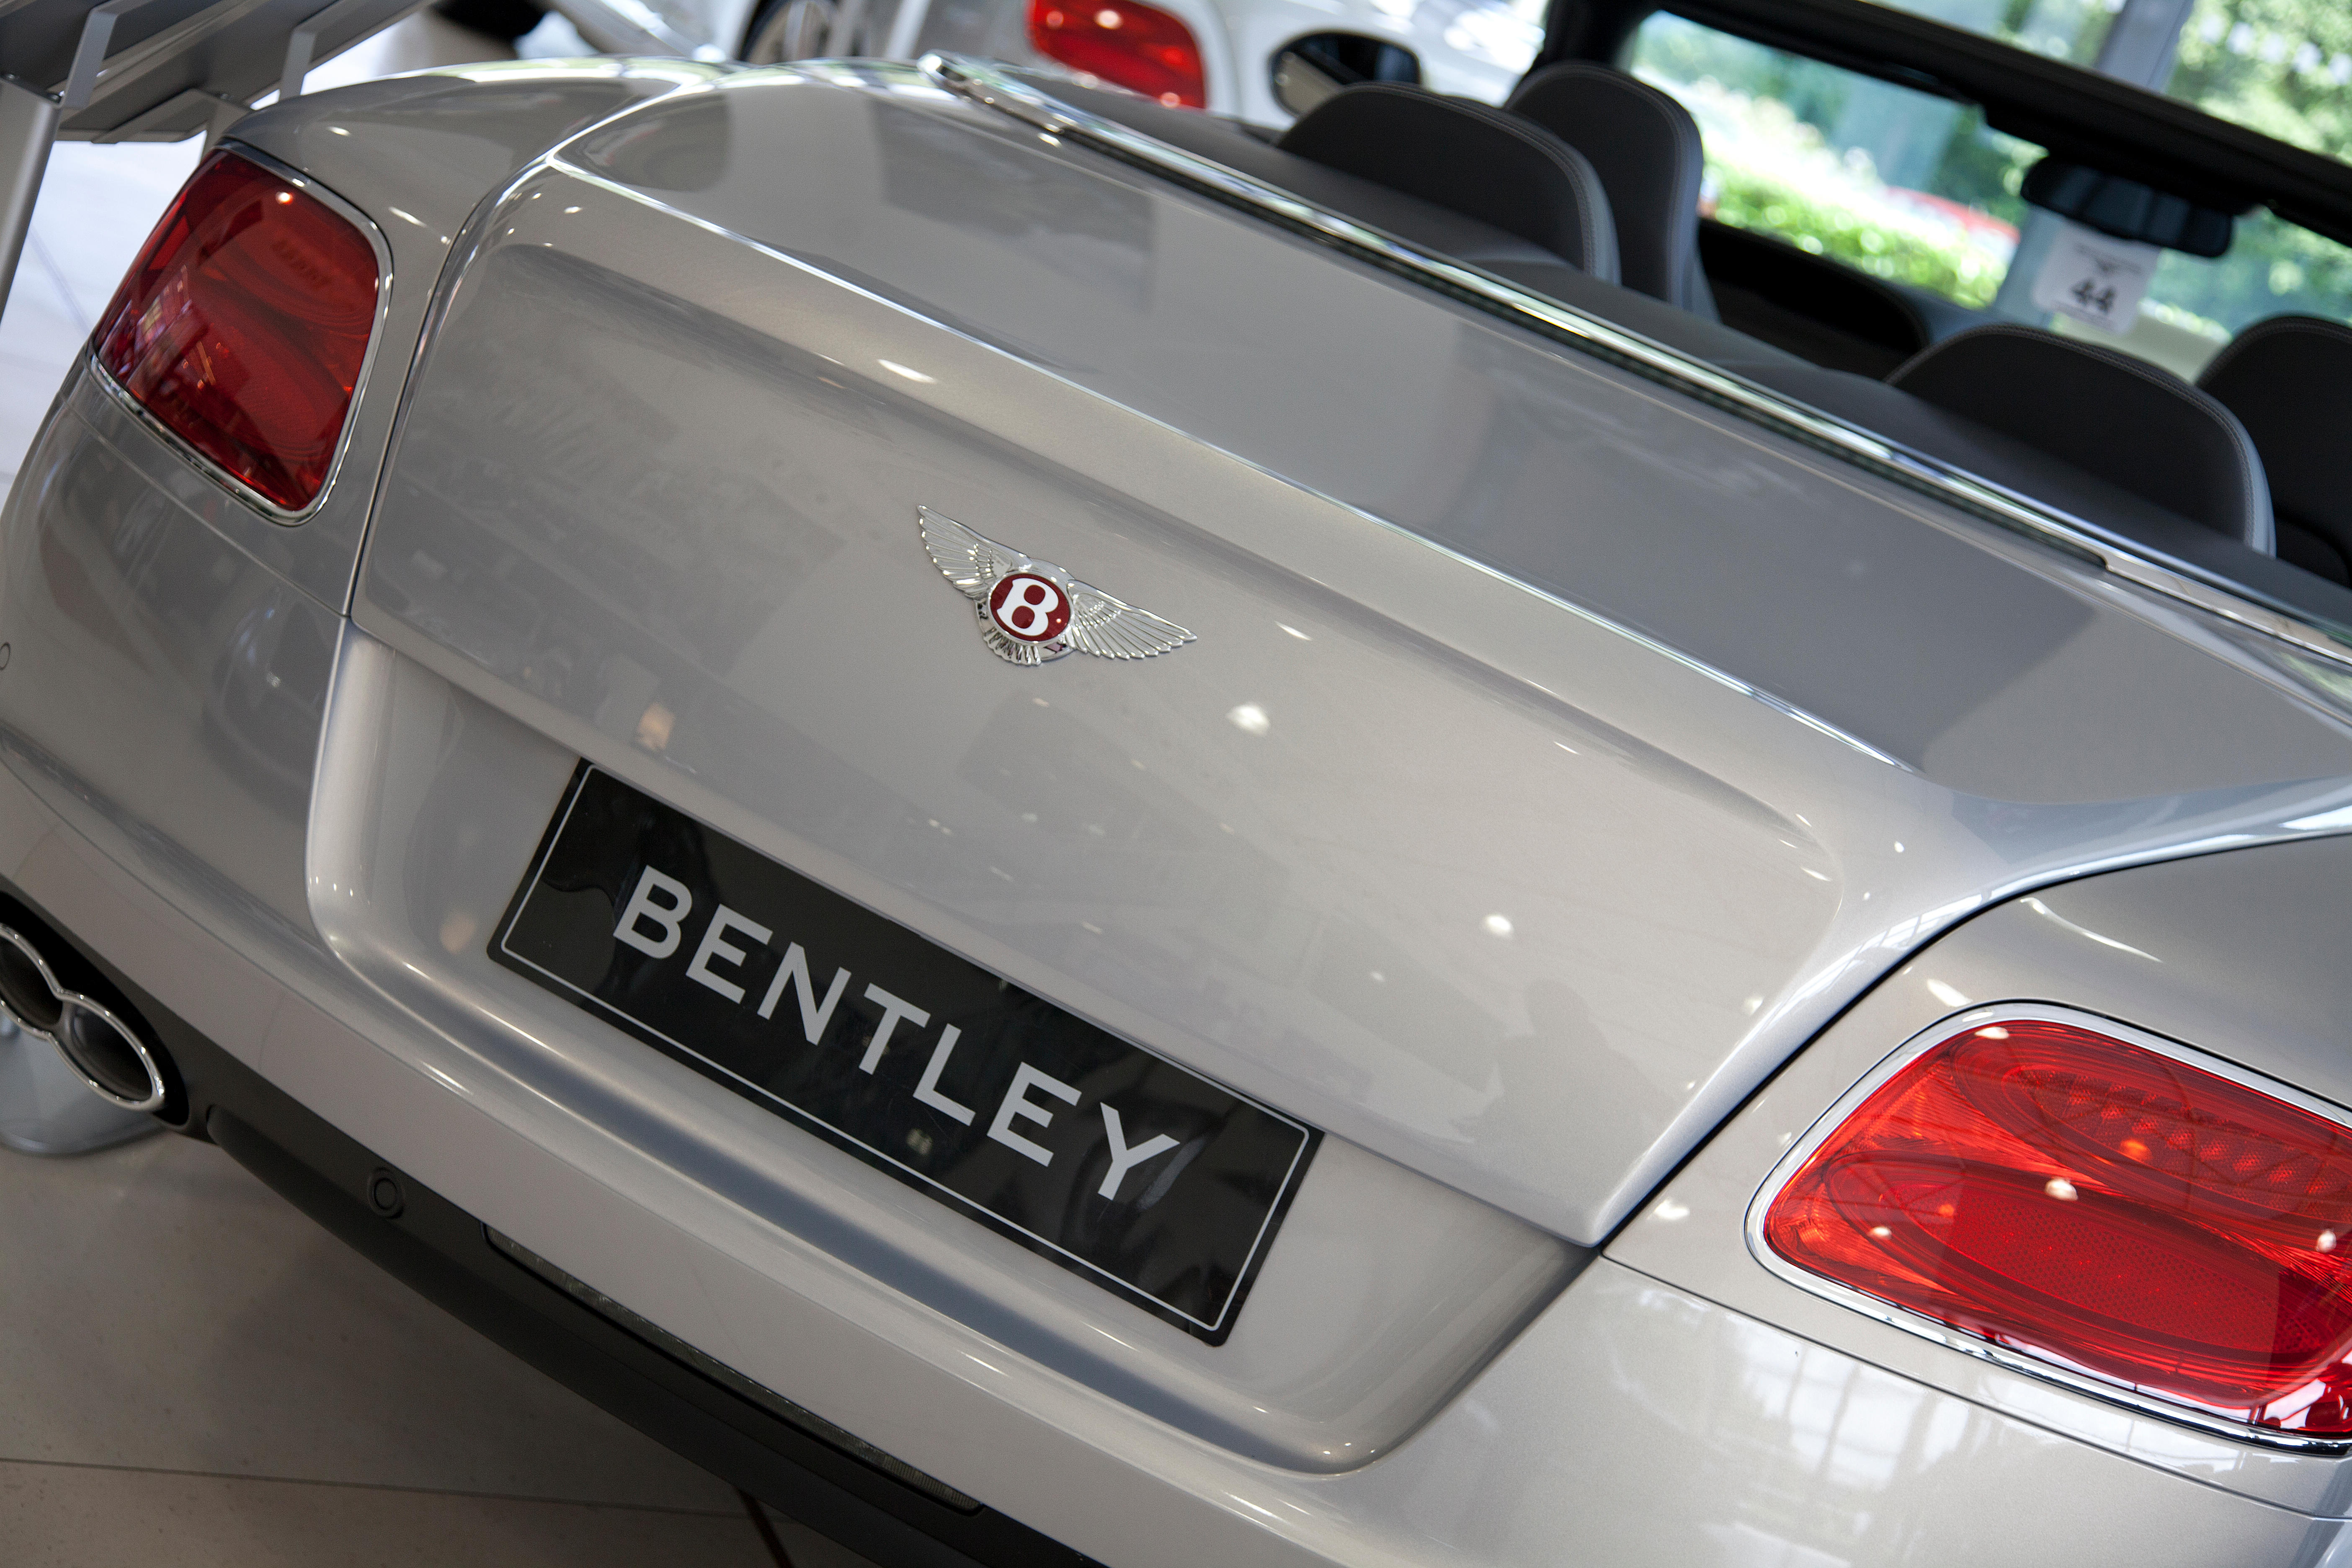 Bentley Manchester Knutsford 01565 632222